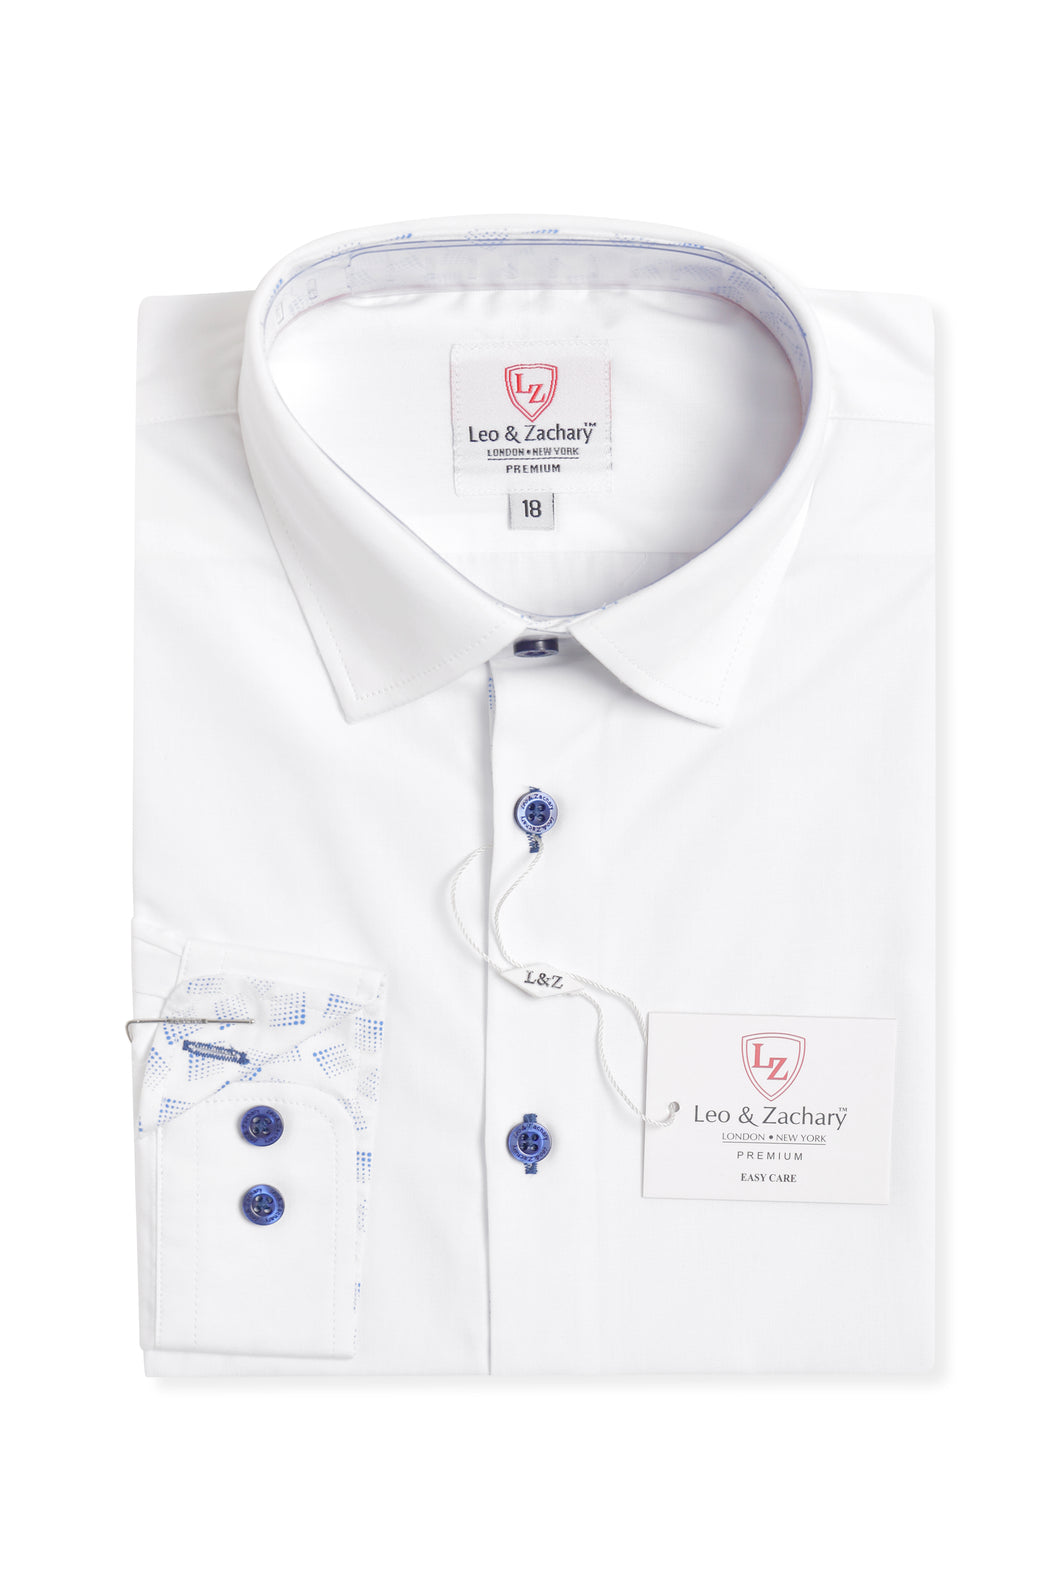 NON IRON white/royal stitch L/S Dress Shirt P5517